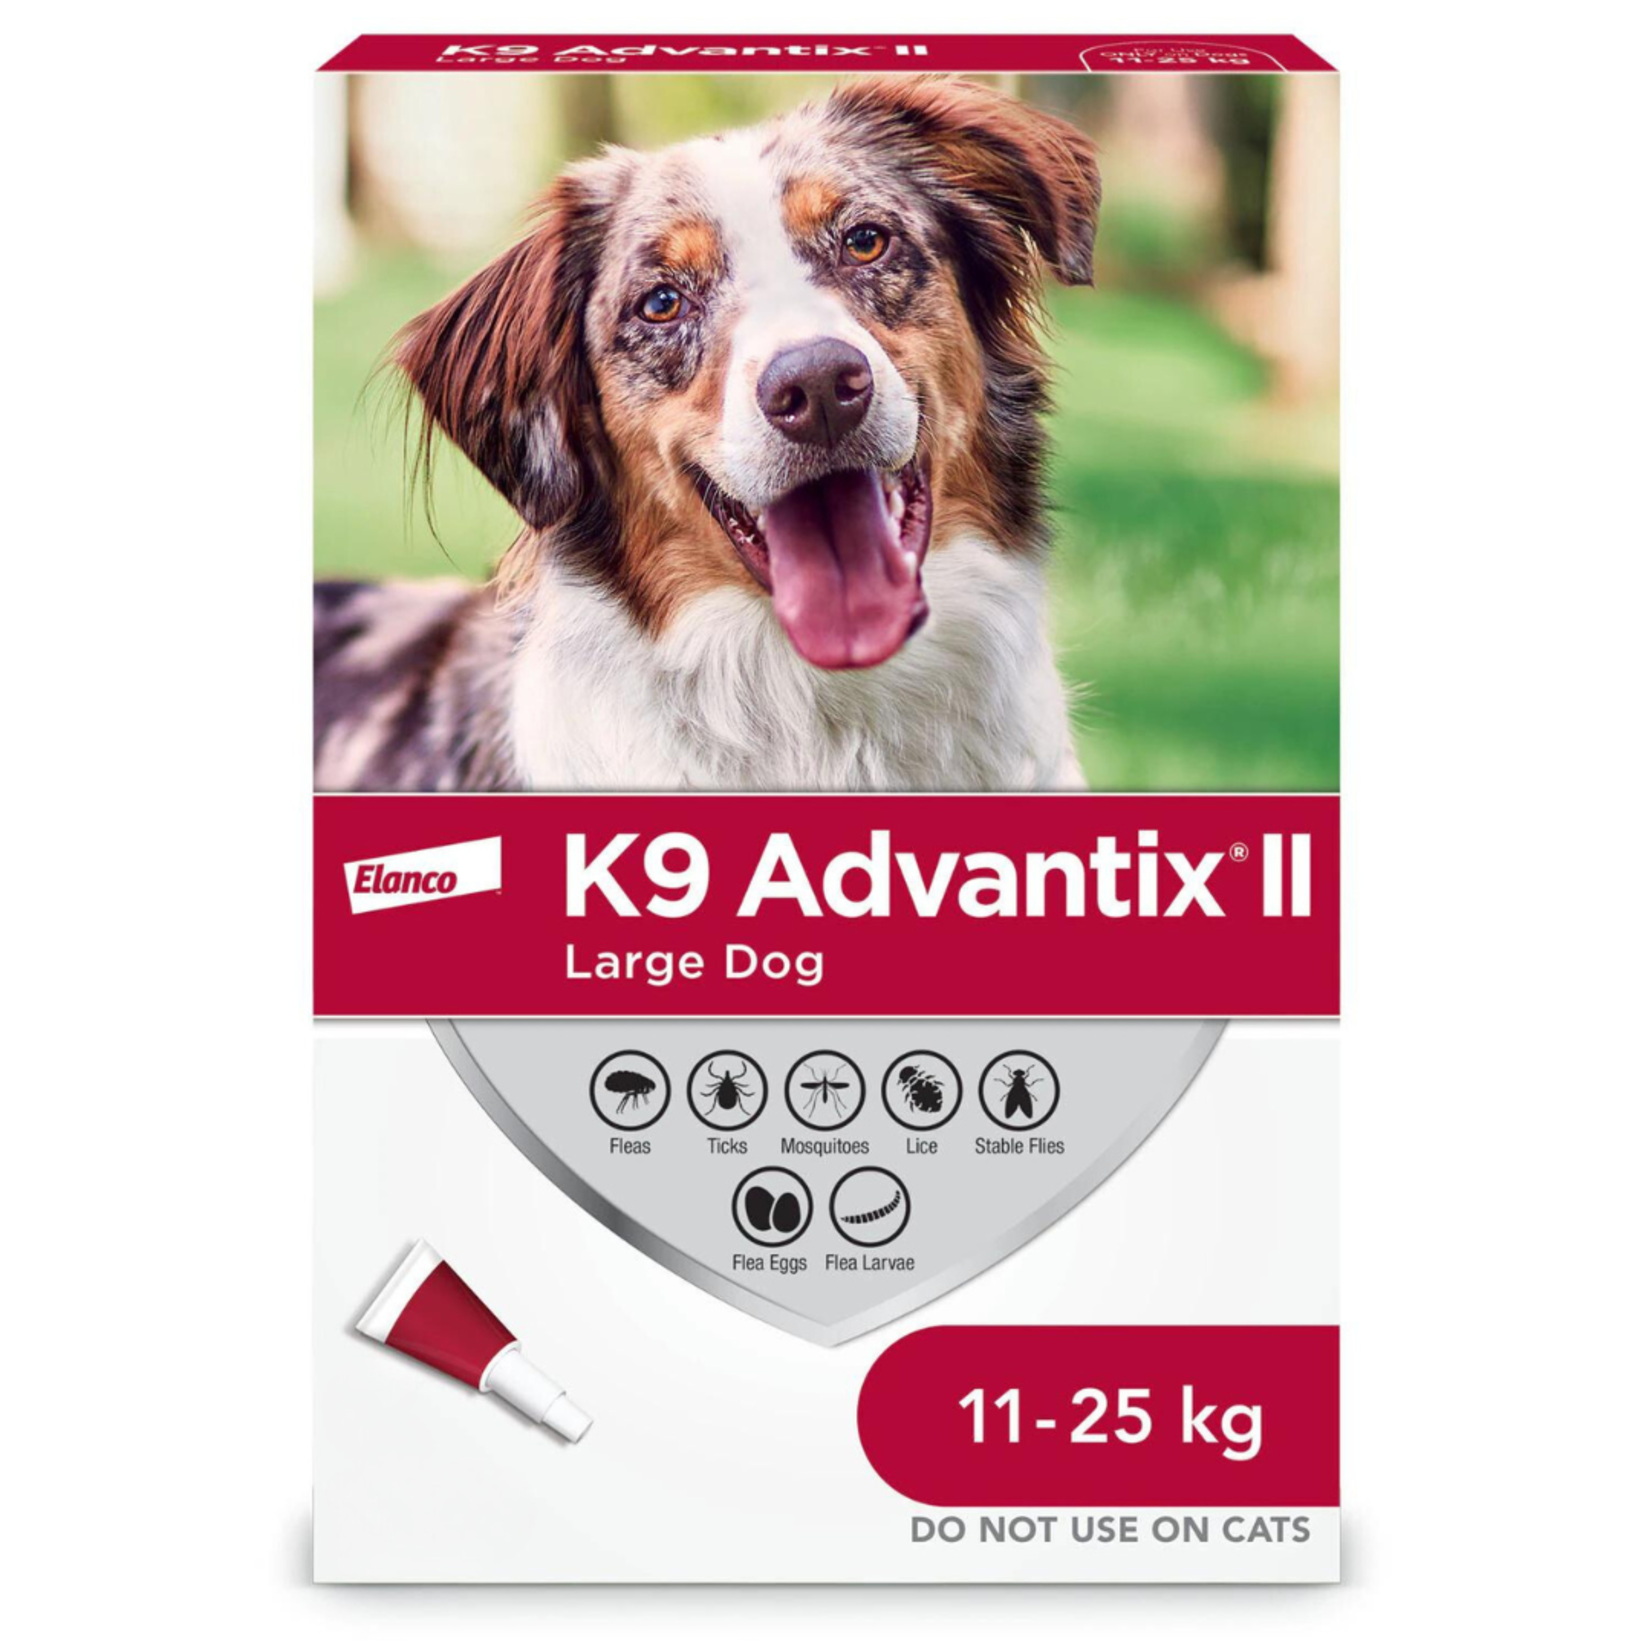 Elanco K9 Advantix II for Large Dogs